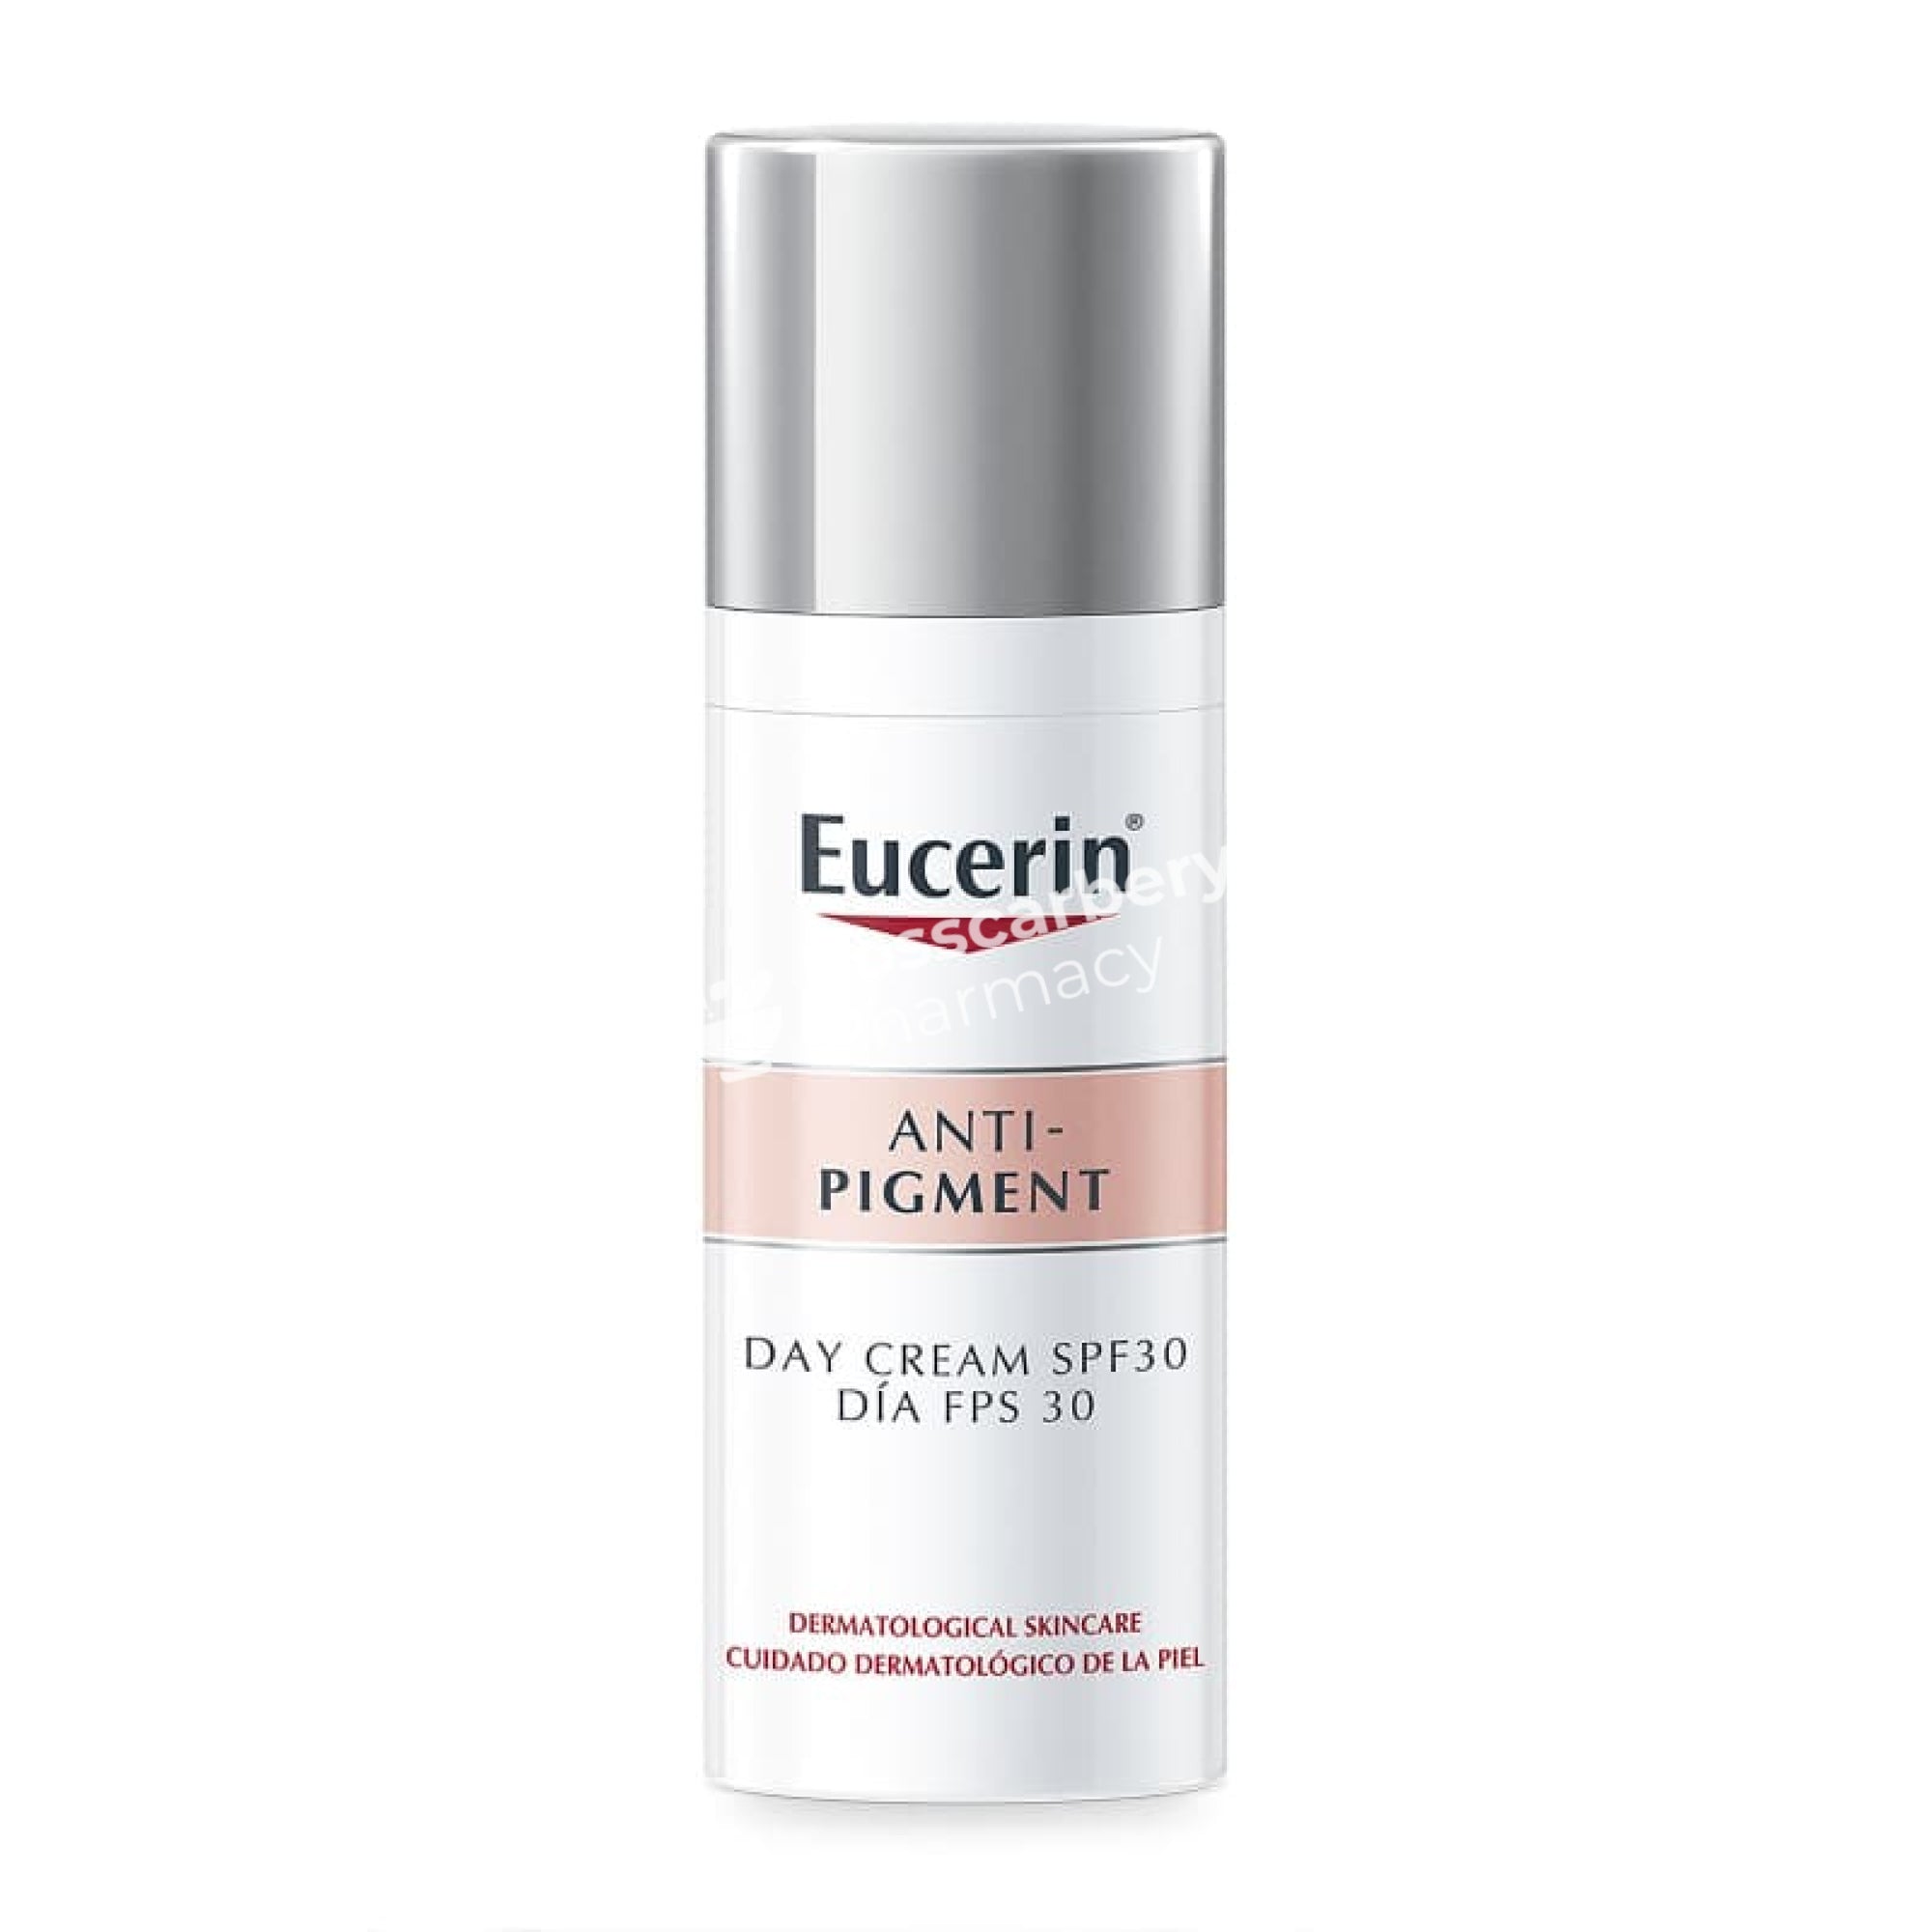 Eucerin Hyperpigmentation Anti-Pigment Day Cream Spf30 Facial Moisturiser